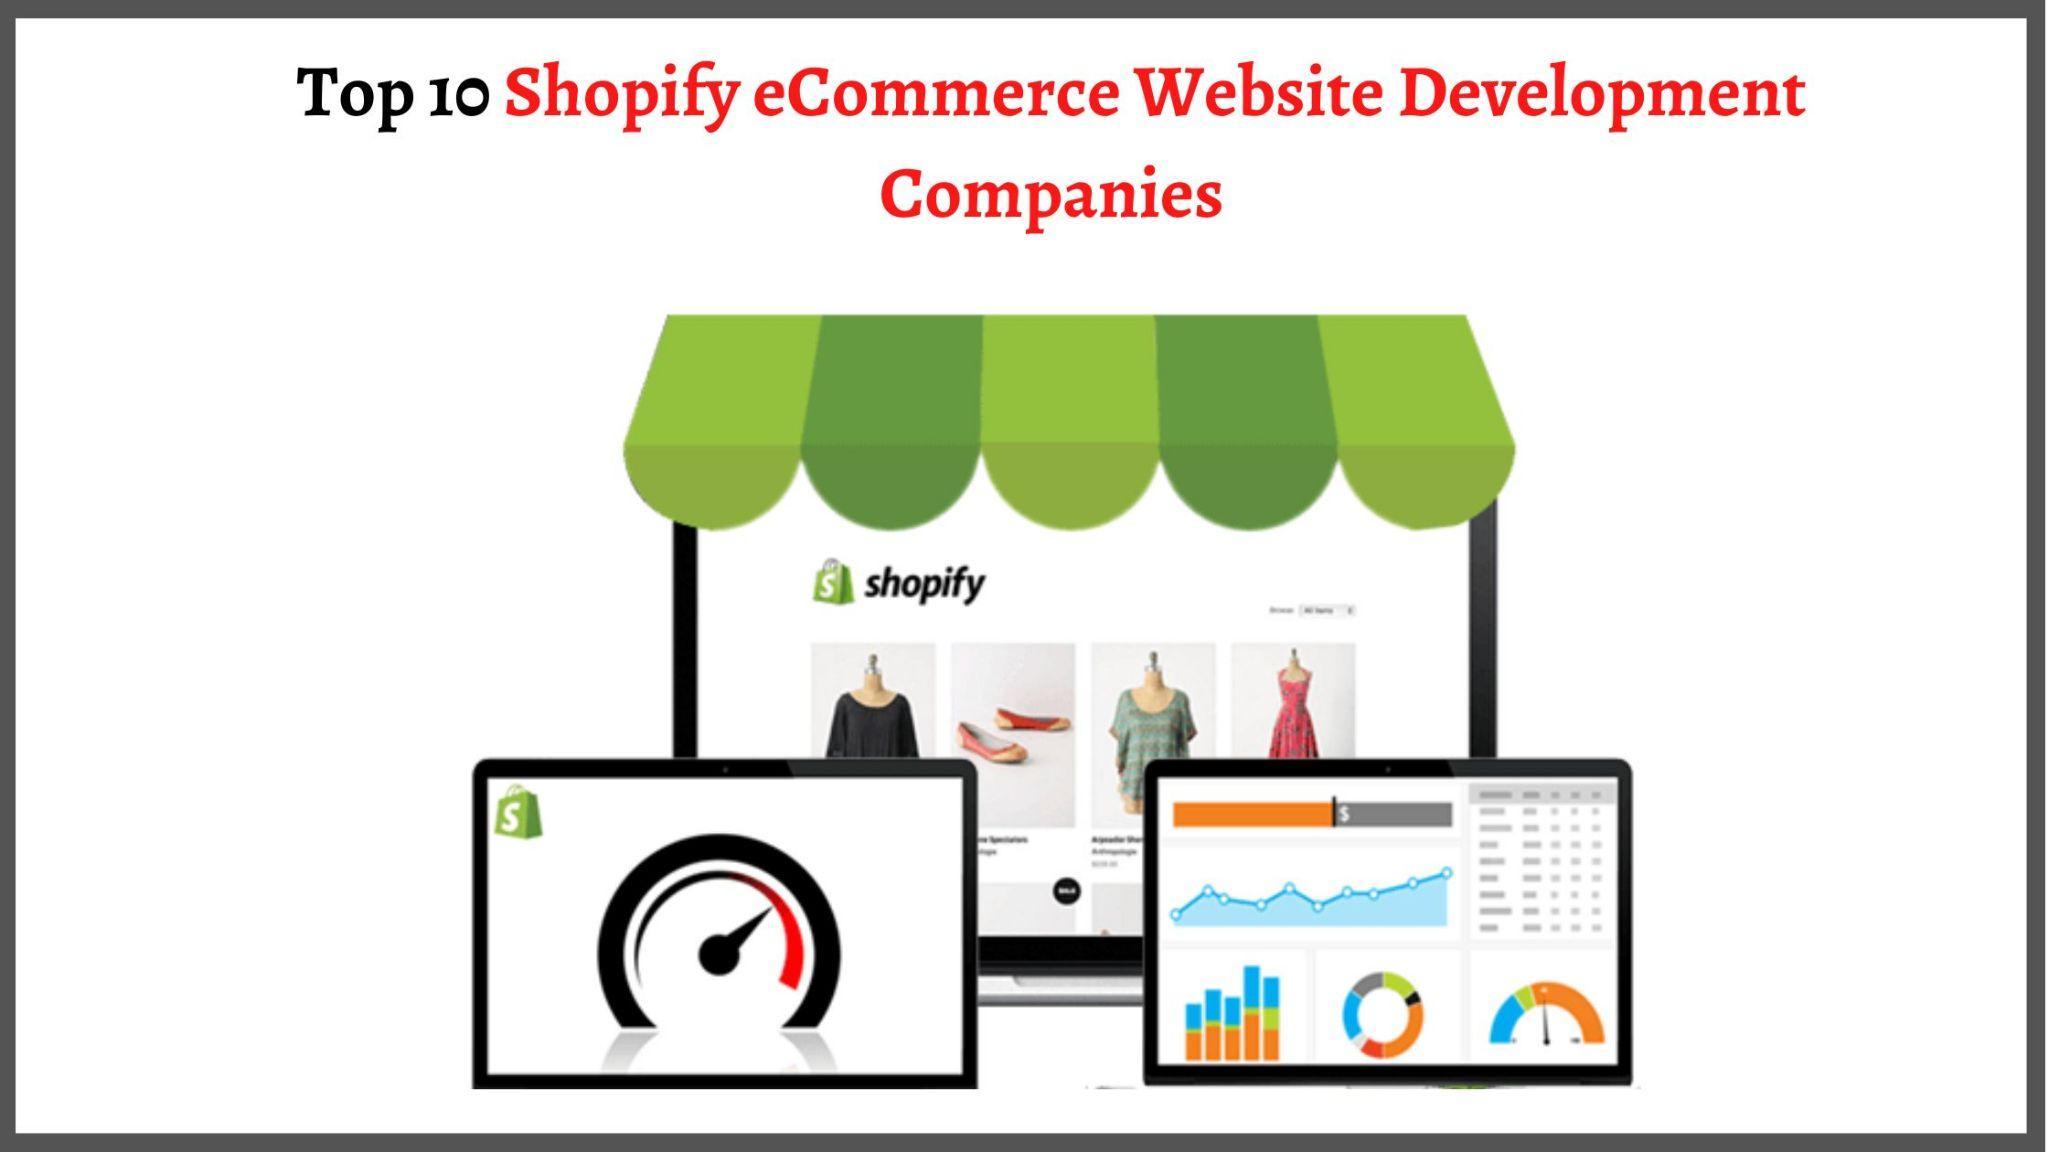 Top 10 Shopify eCommerce Website Development Companies